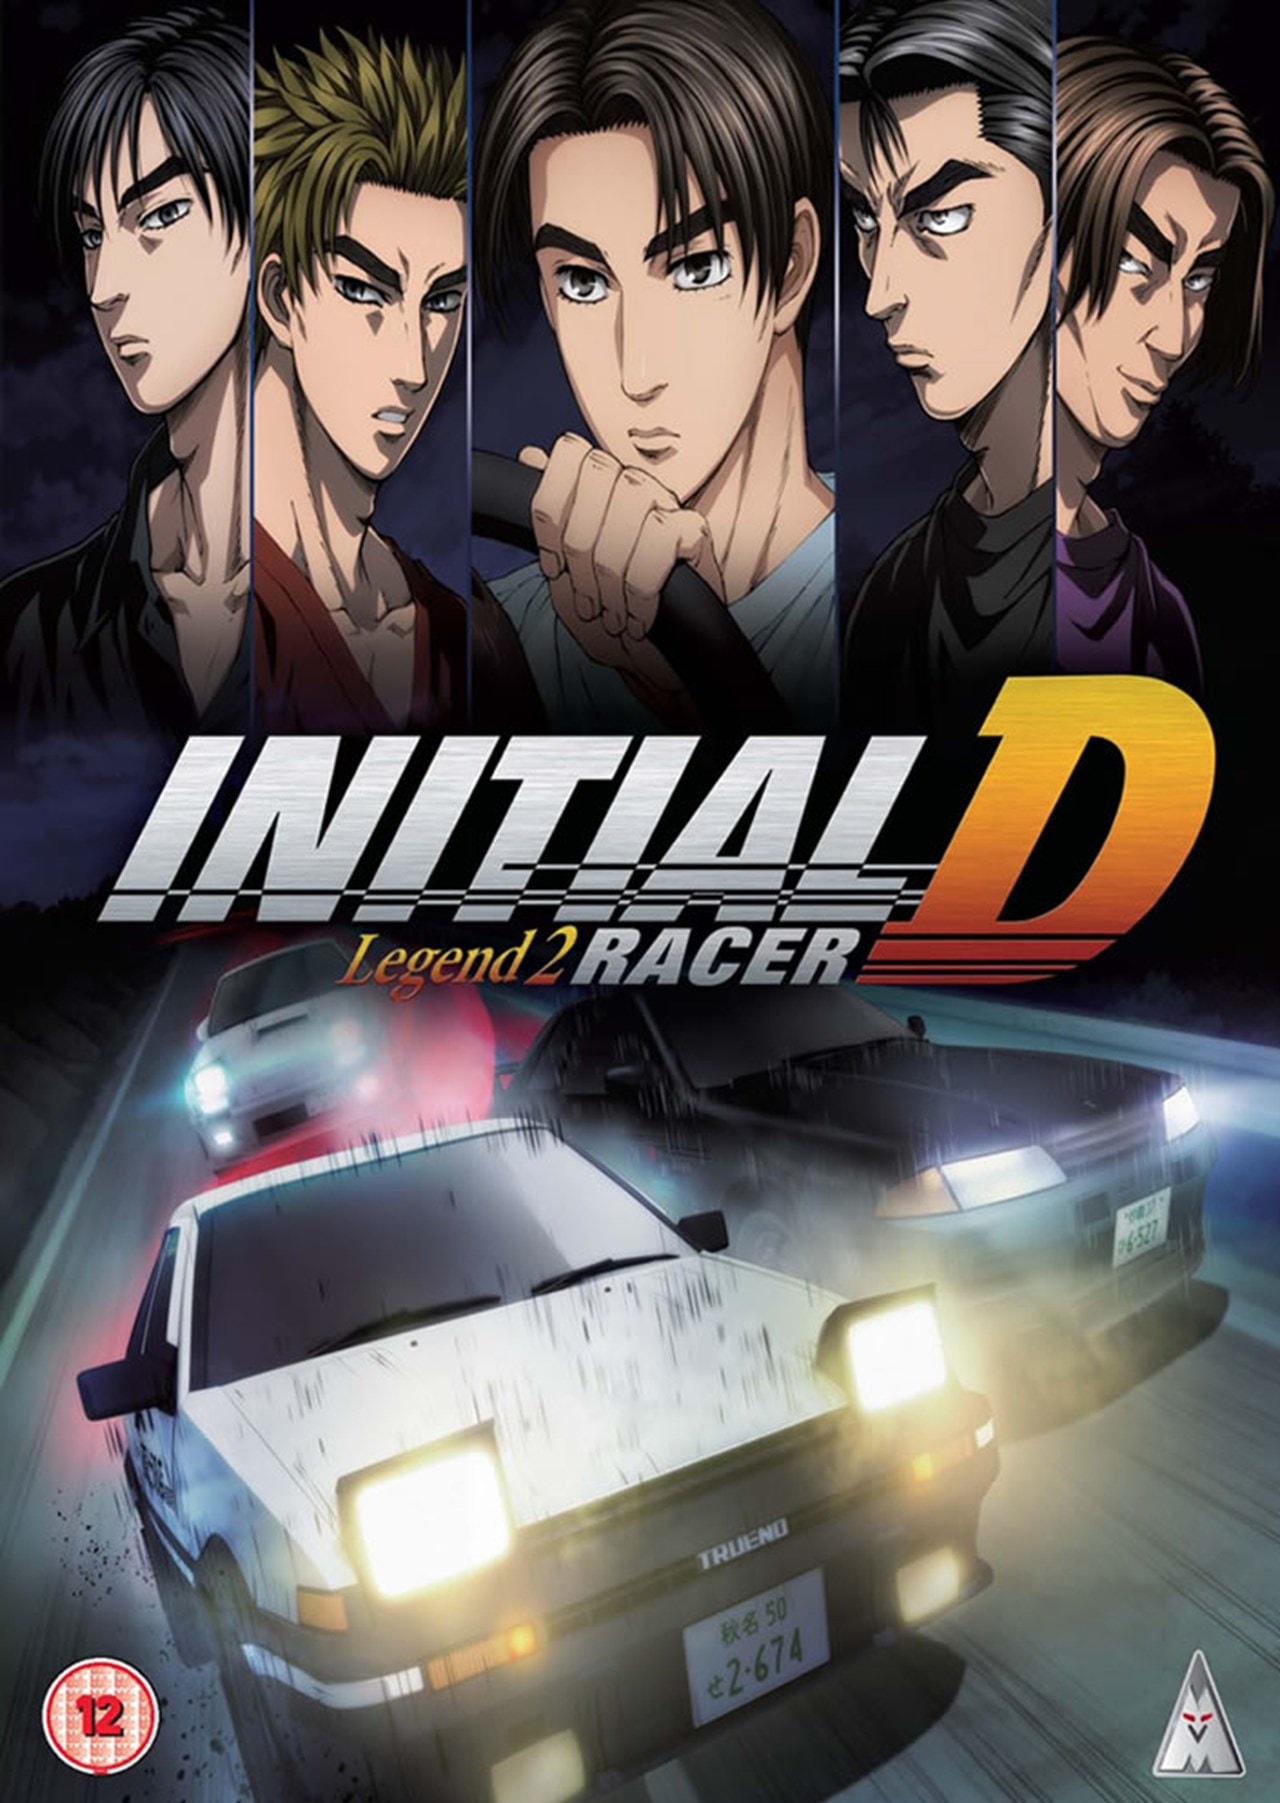 Initial D Legend 2 Racer DVD Free shipping over £20 HMV Store